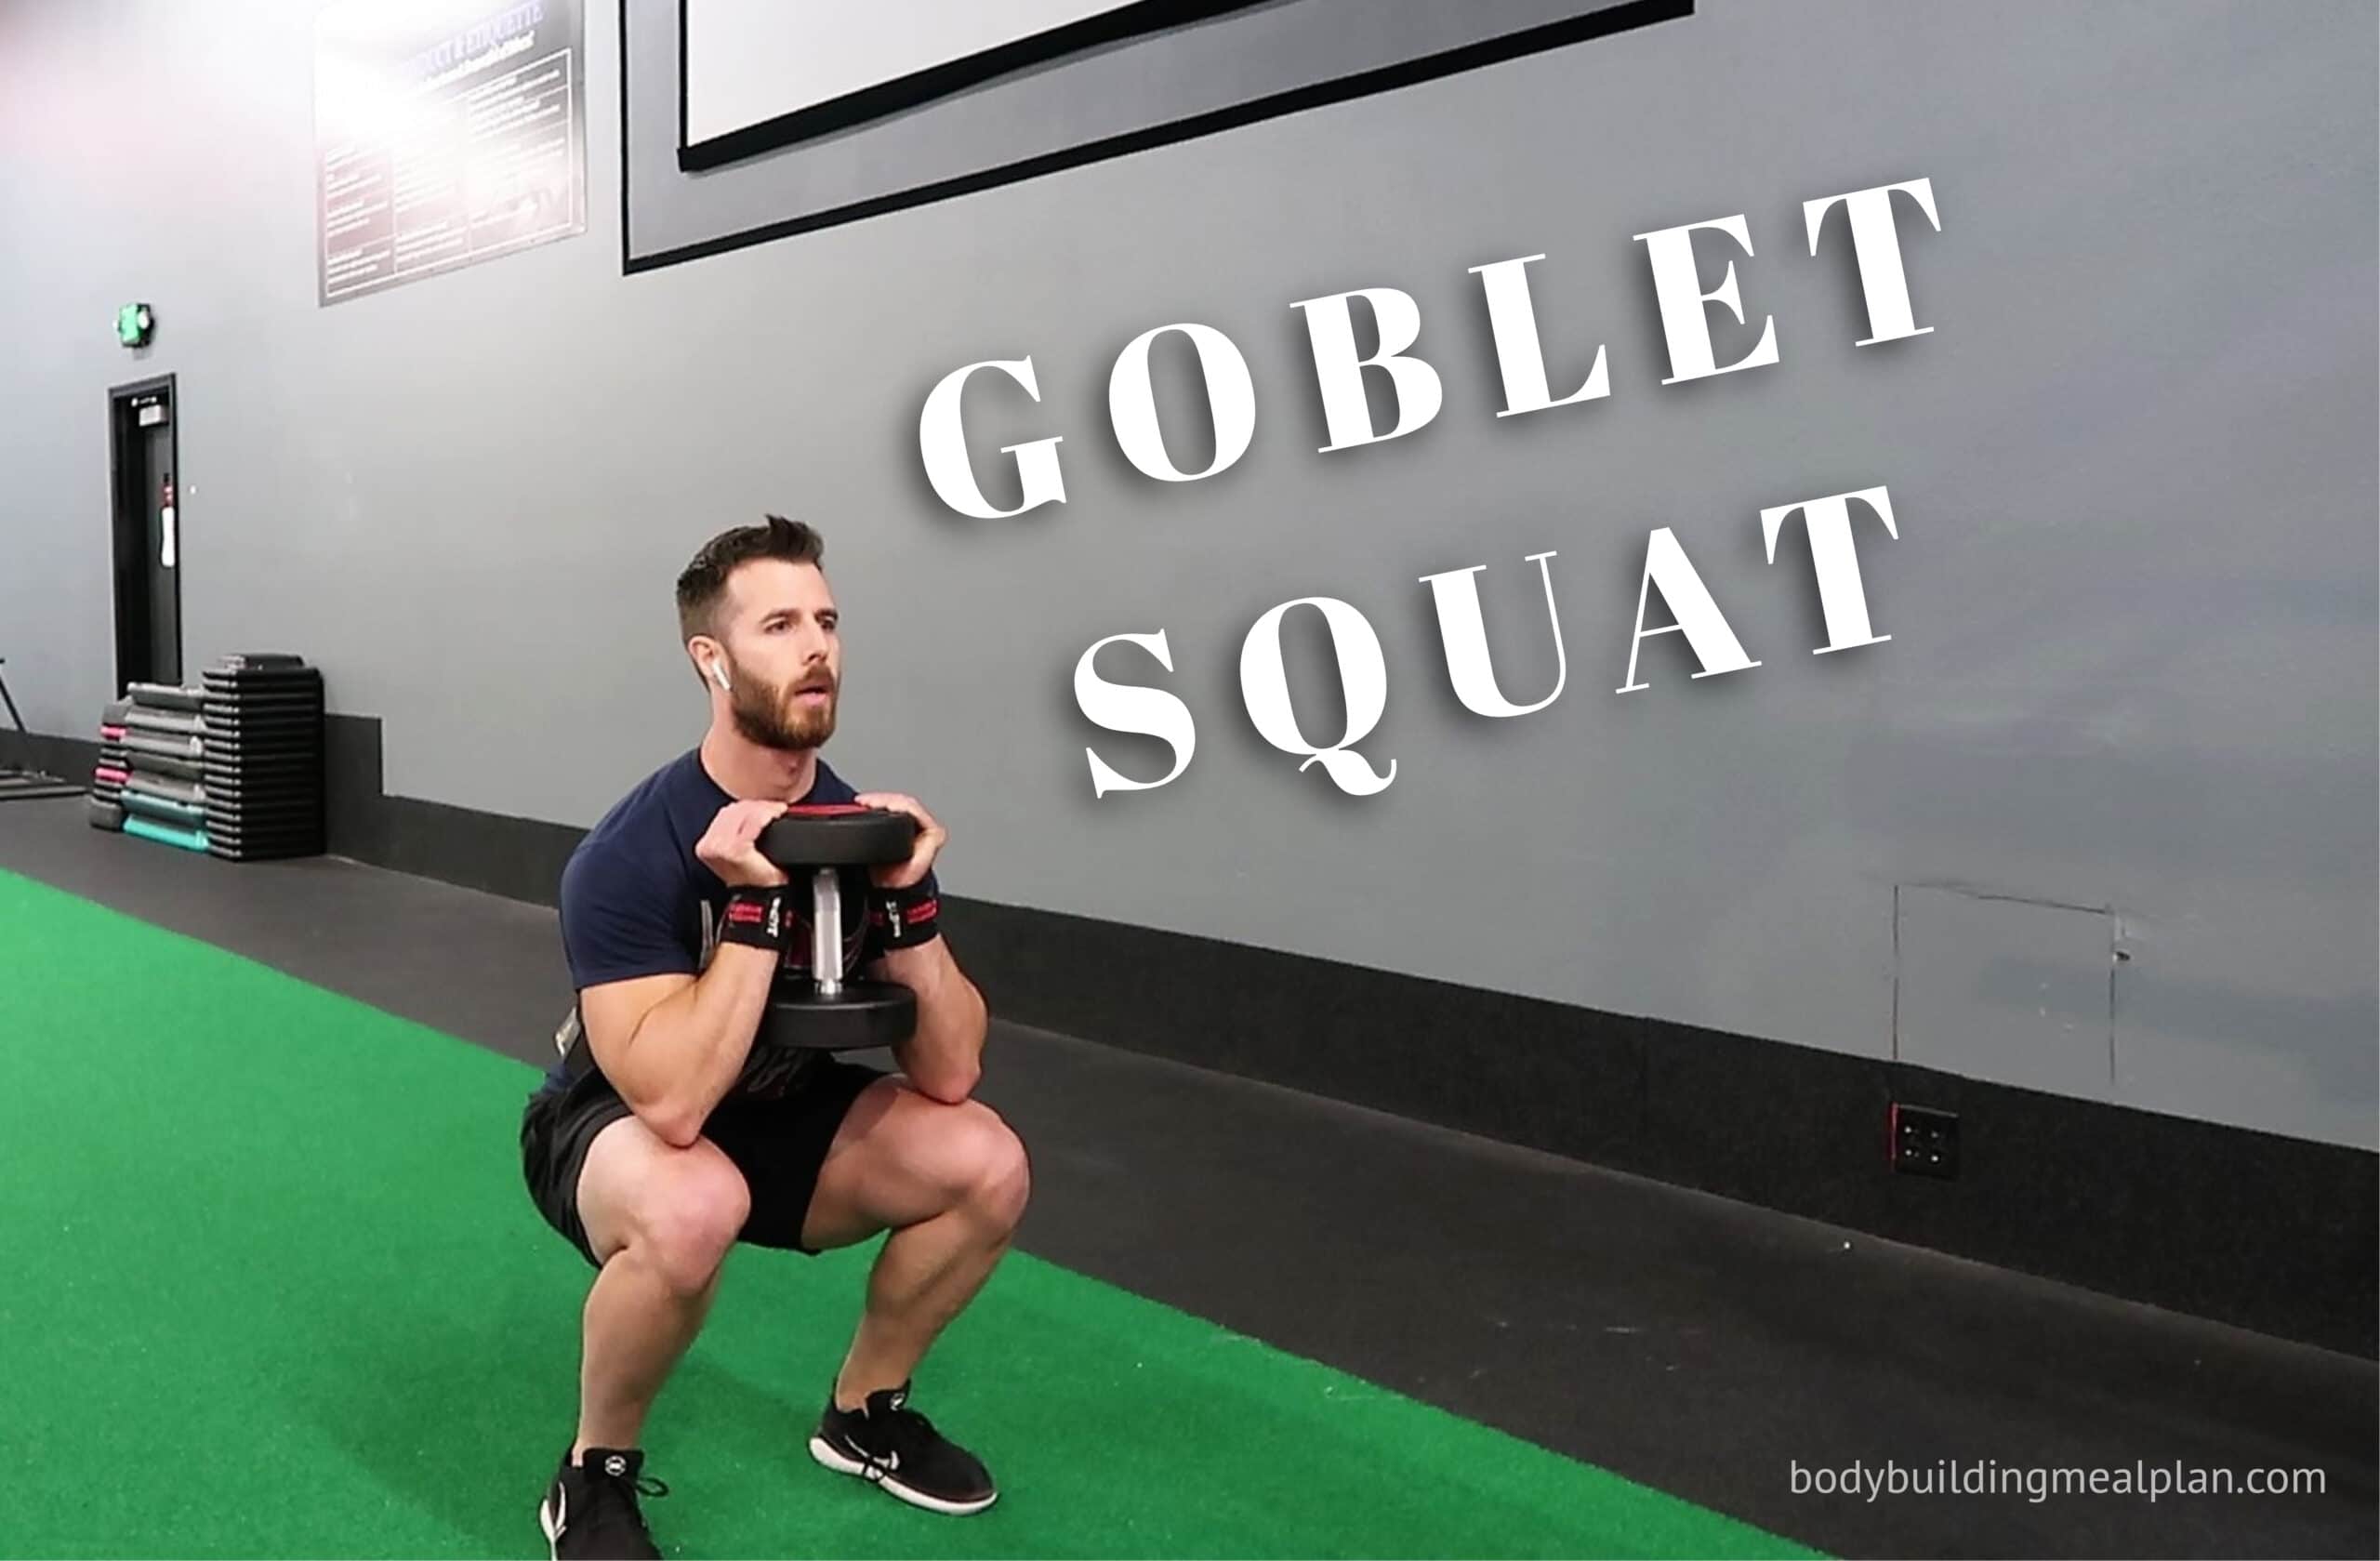 Dumbbell goblet split squat exercise instructions and video